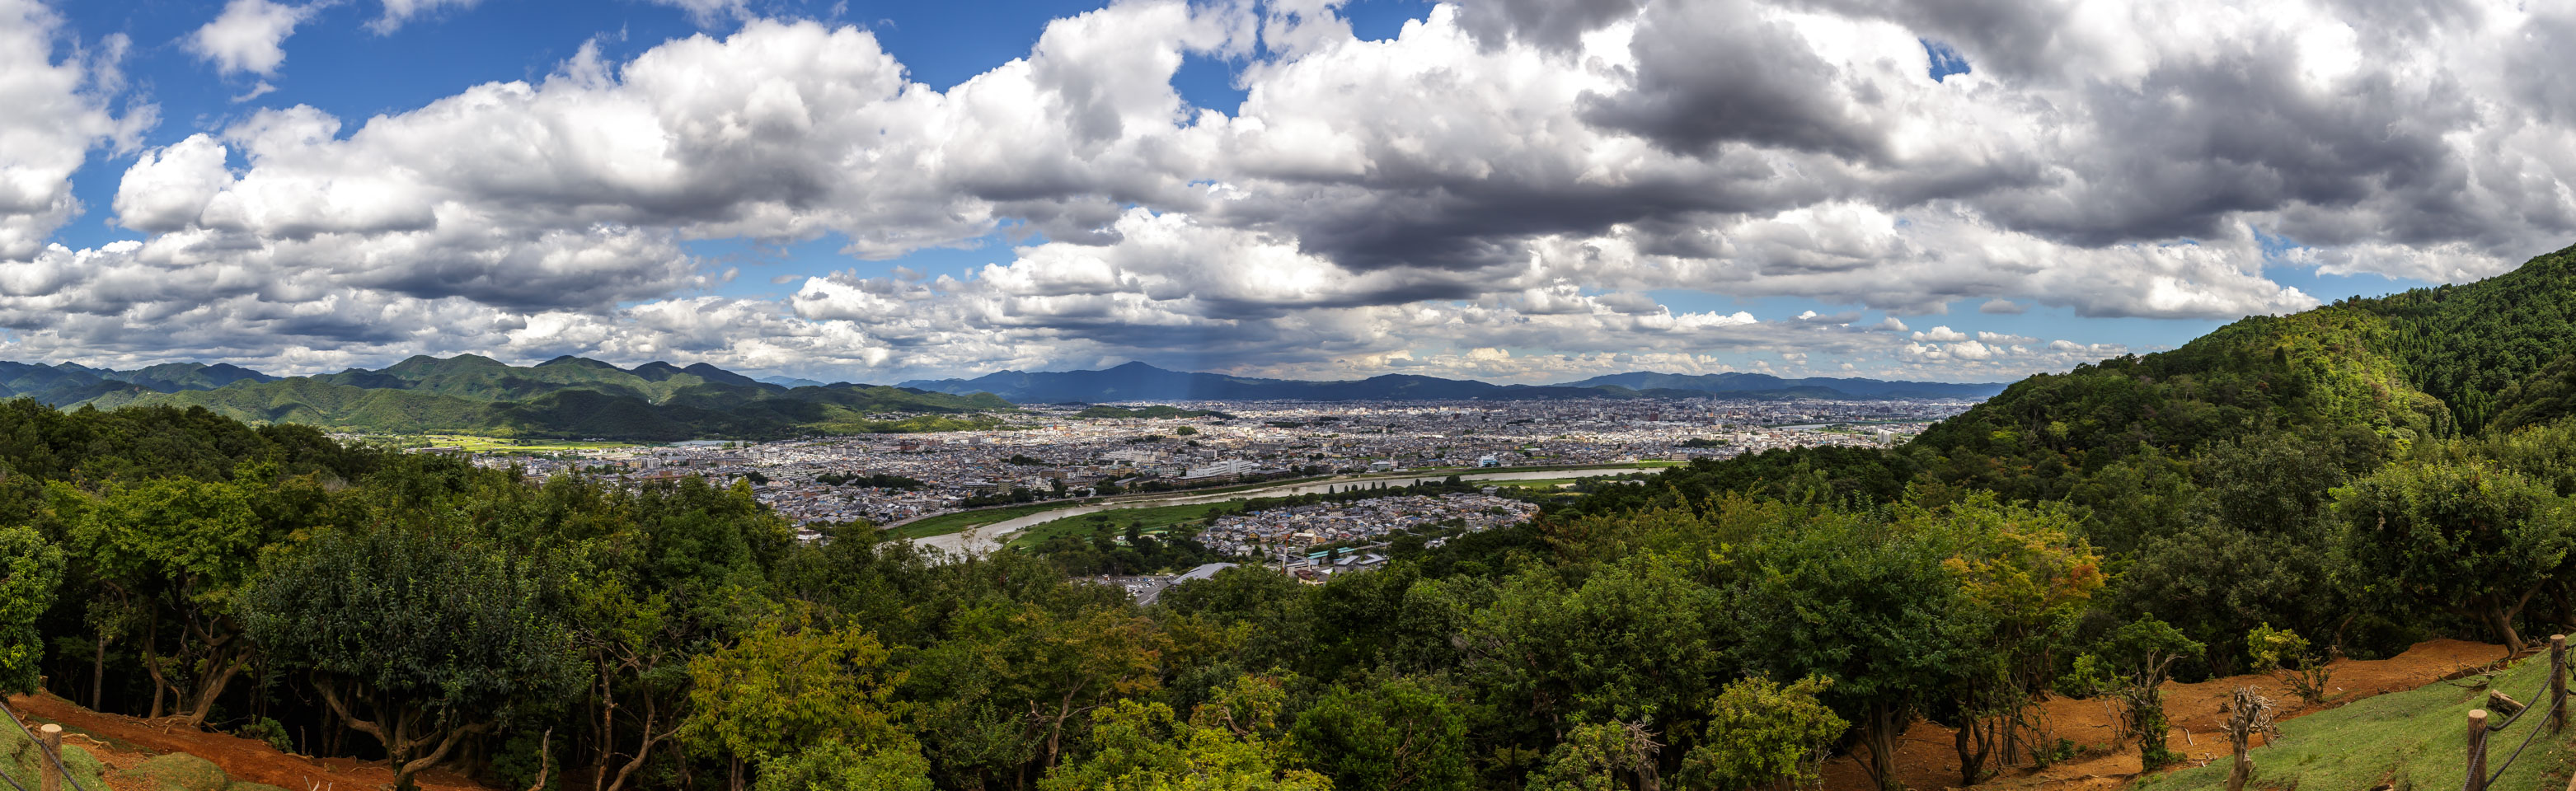 /Guewen/galeries/public/Voyages/Japon/kyoto/vista/Kyoto-vista_008.jpg